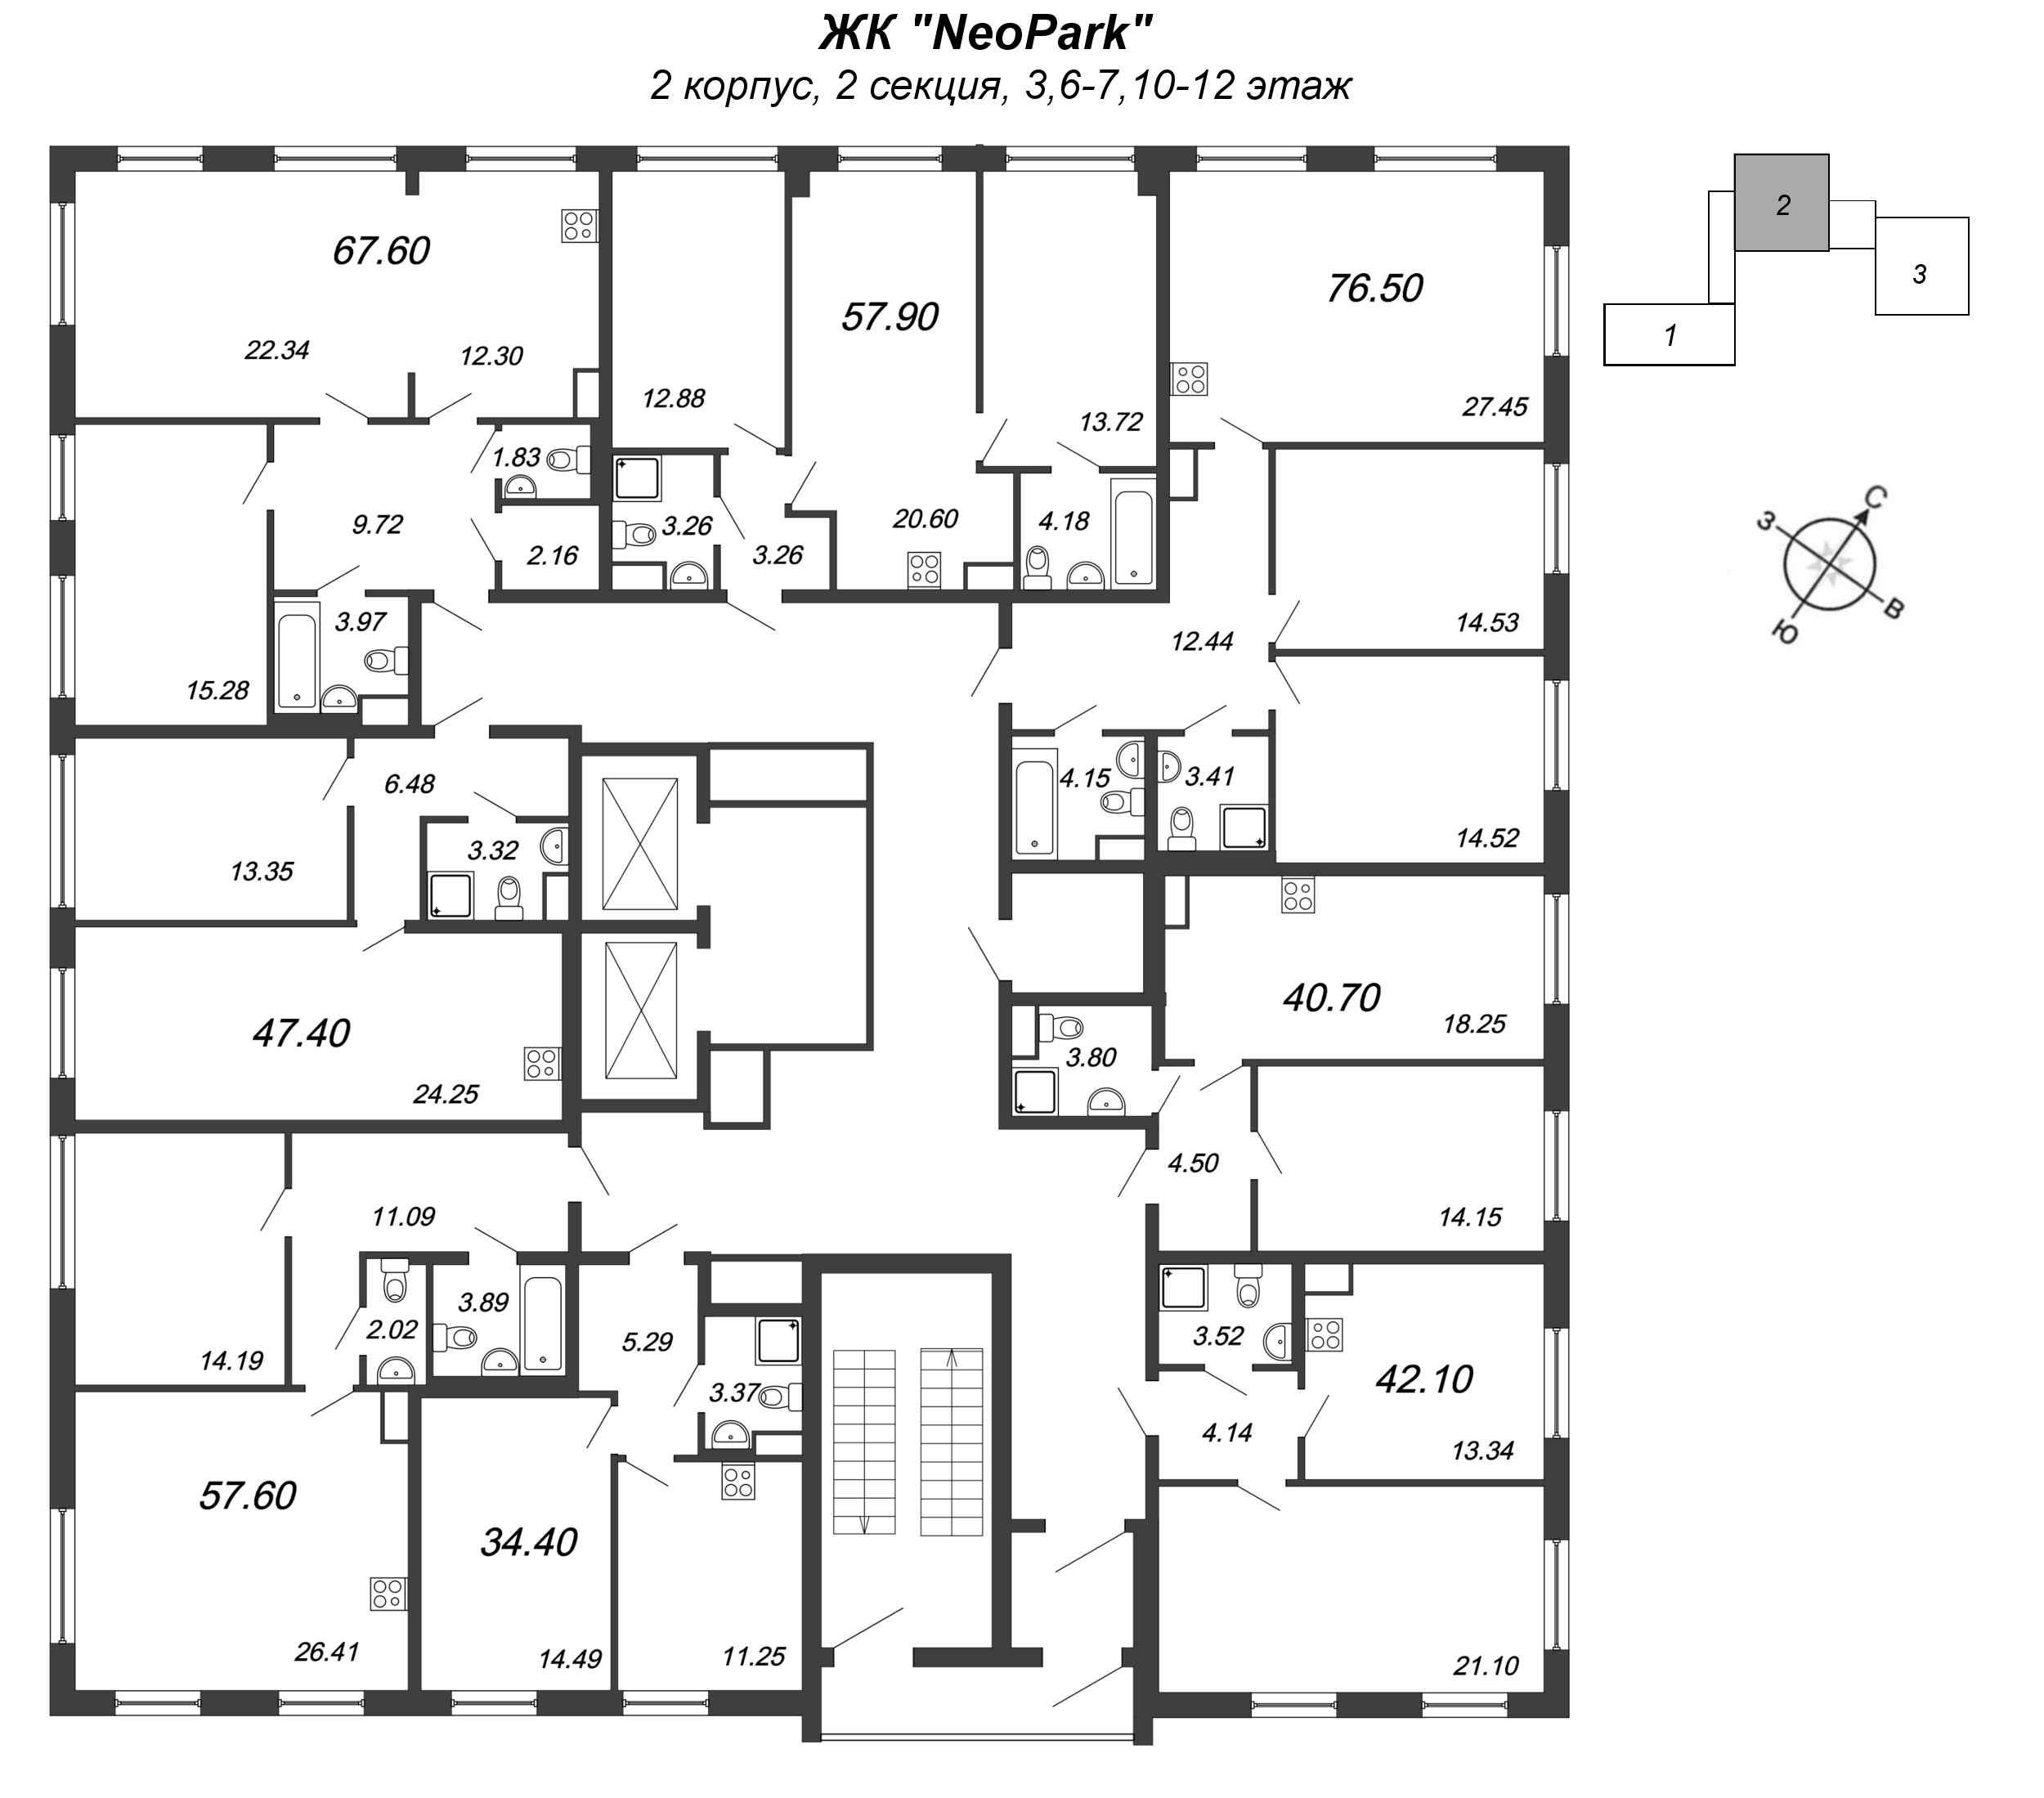 2-комнатная (Евро) квартира, 57.7 м² - планировка этажа